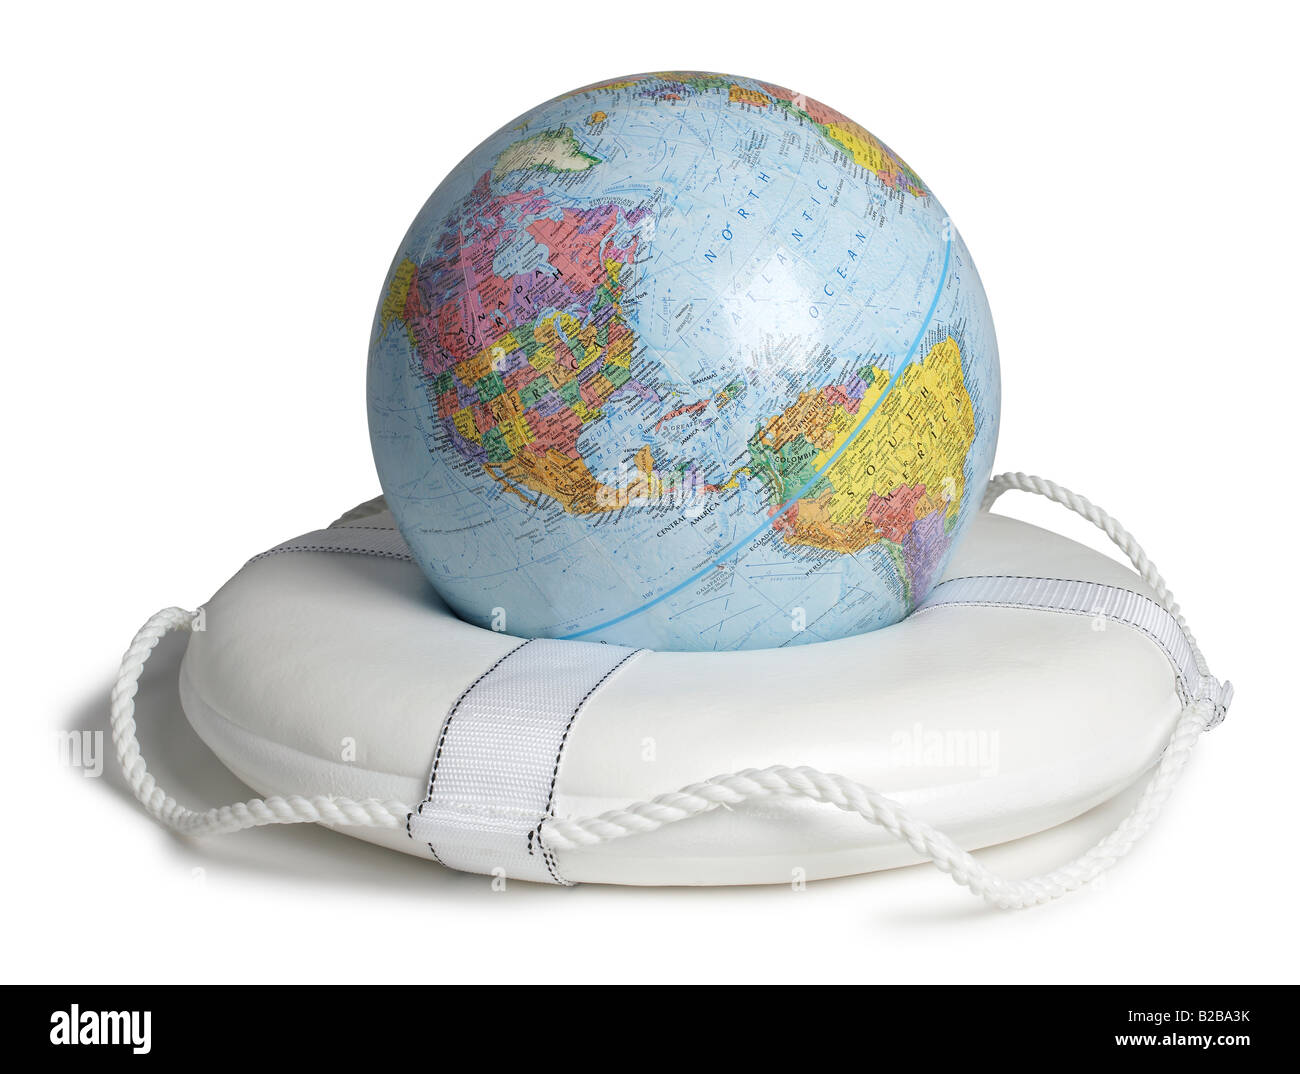 Globe life preserver life jacket world globe Stock Photo